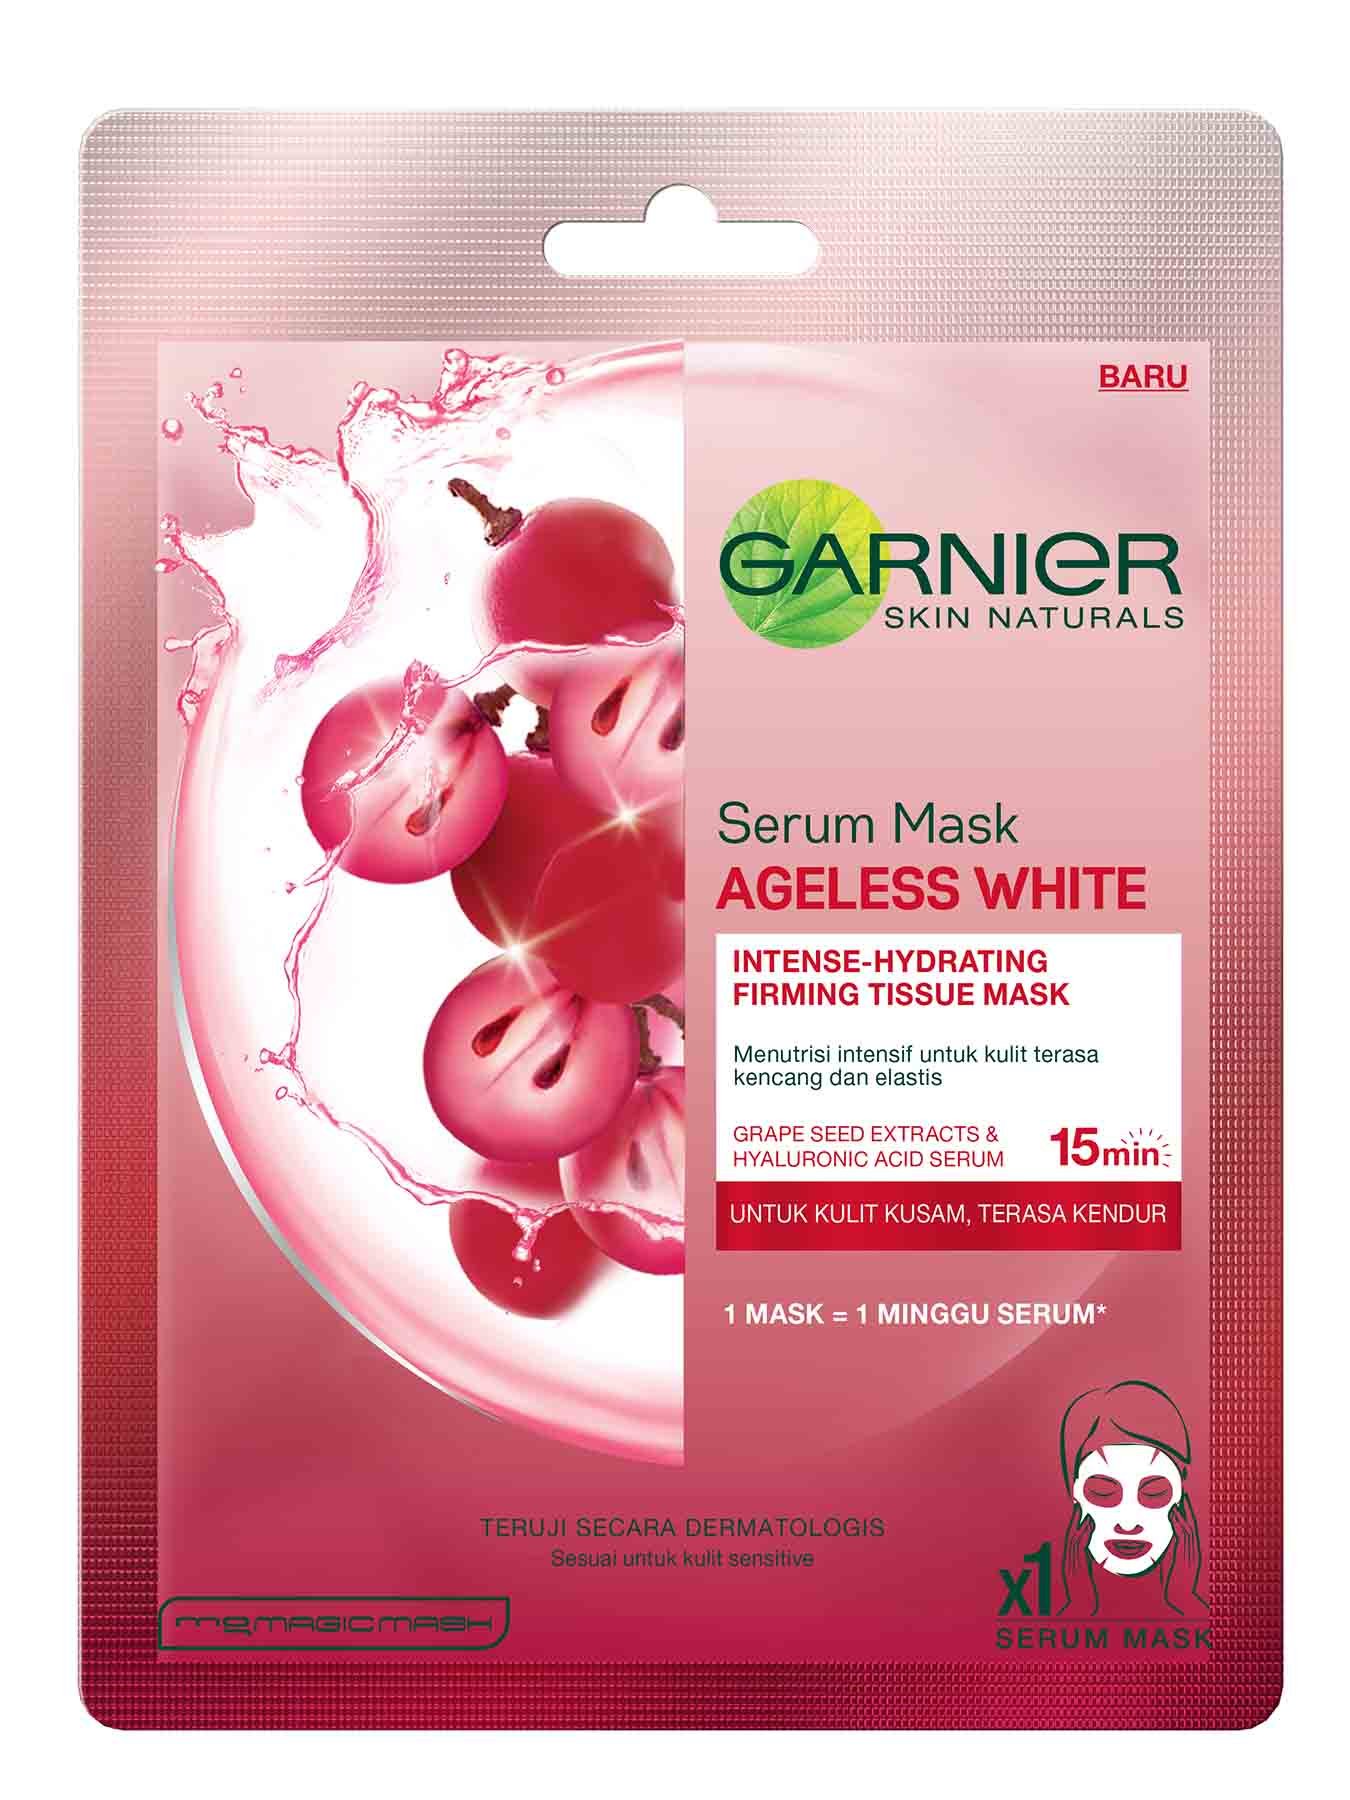 Garnier Ageless White Serum Mask 32g